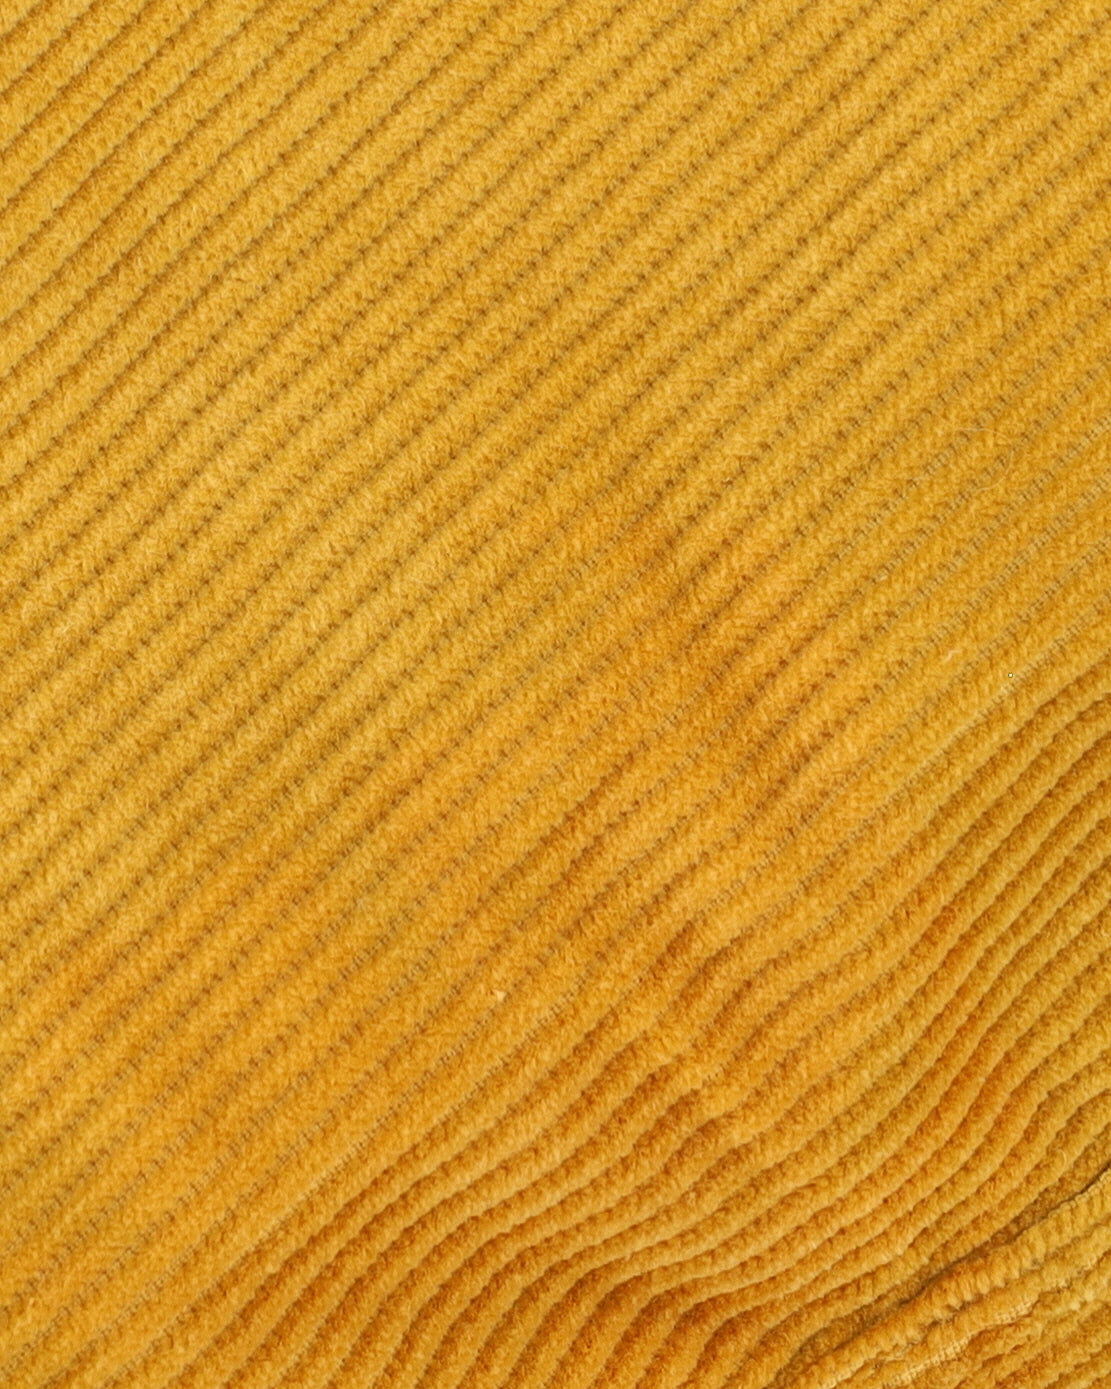 Katherine Hamnett Mustard Yellow Cord Jacket - L